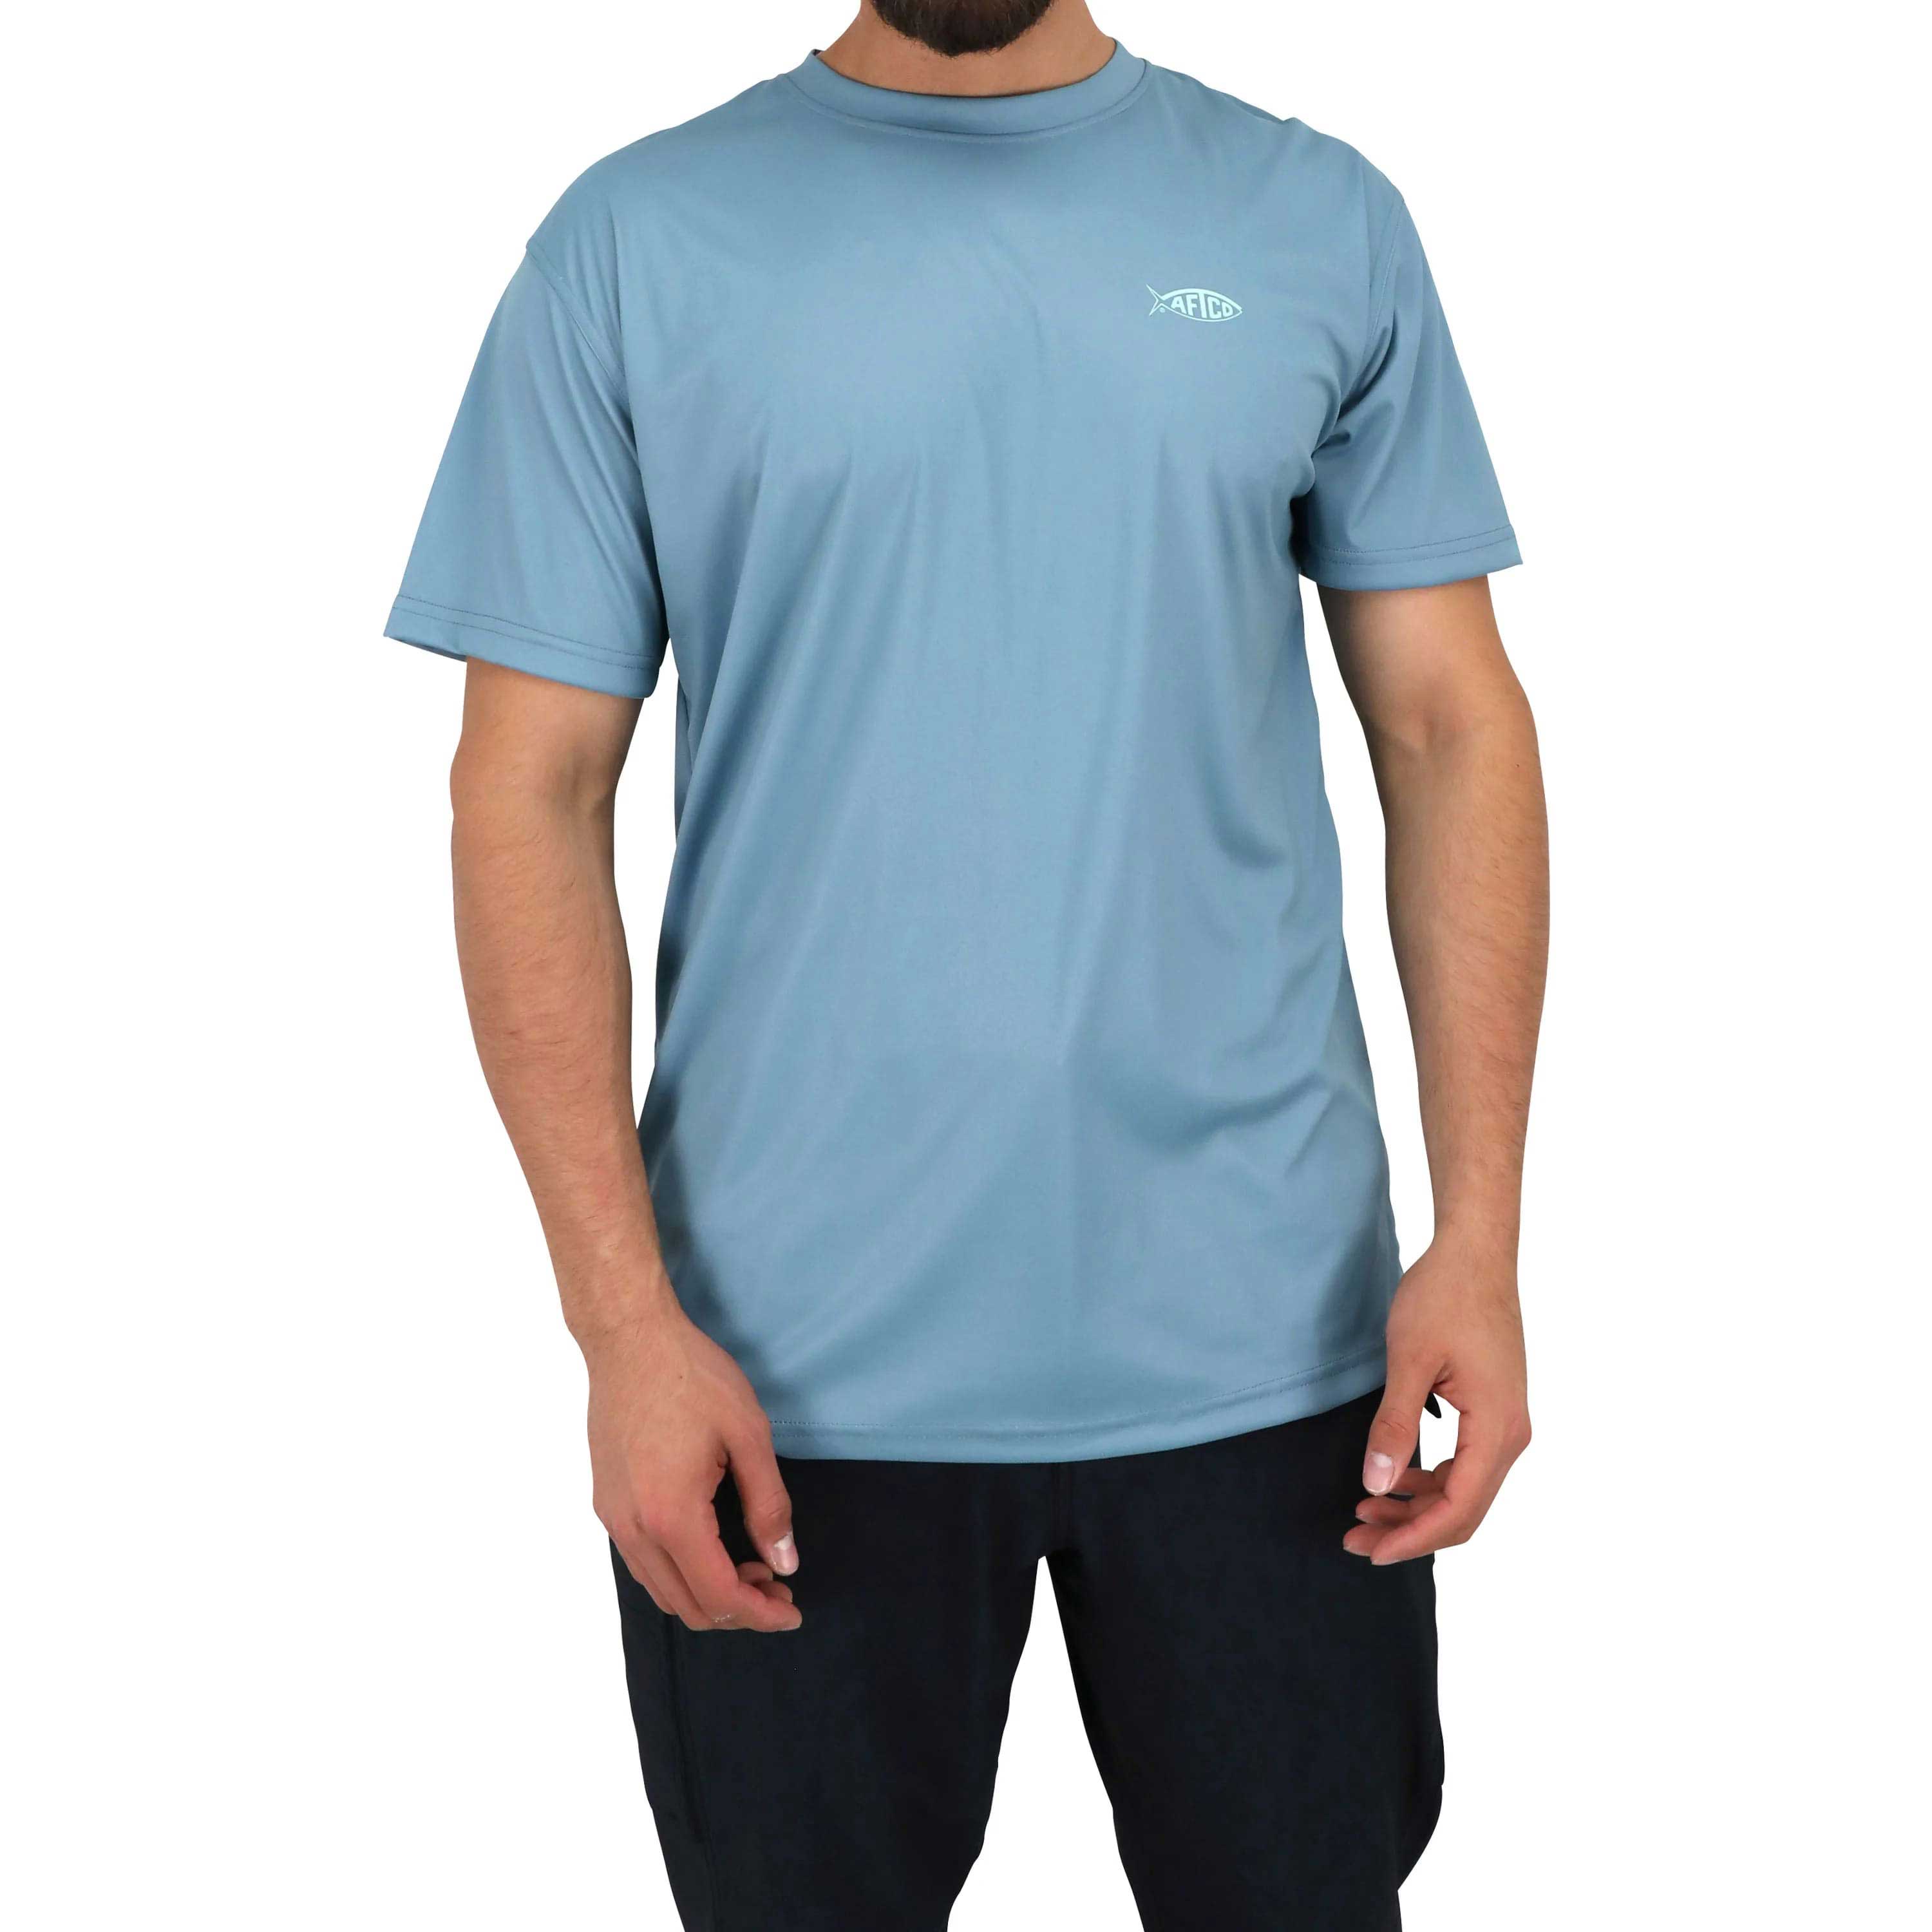 Performance fishing shirts - Aftco -Sun protecting shirts